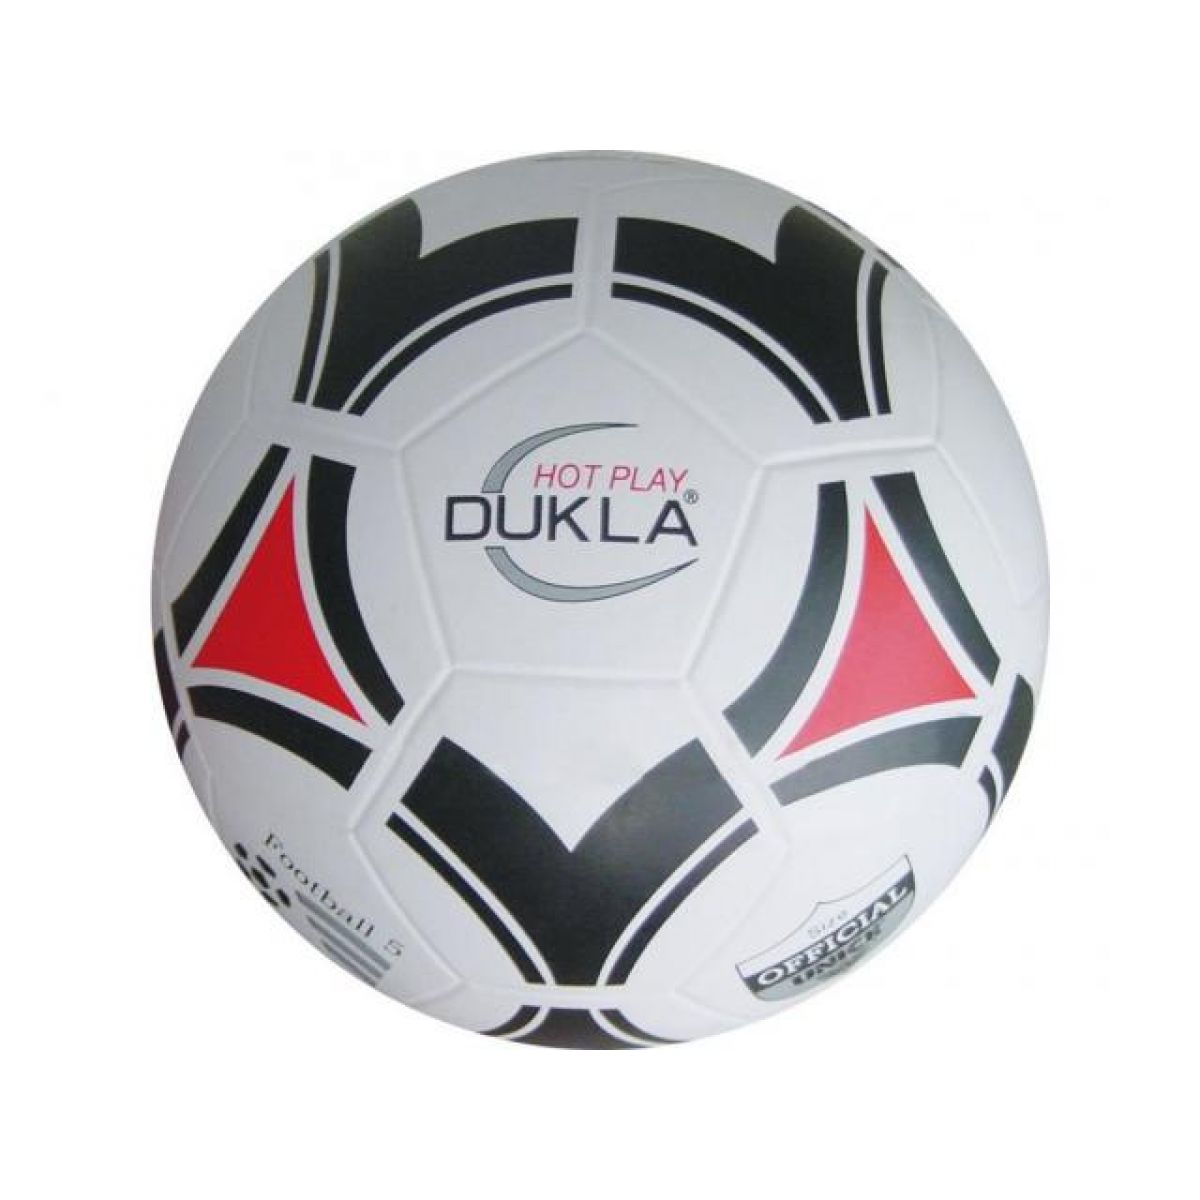 Unice Lopta futbal Dukla Hot play 410 22 cm